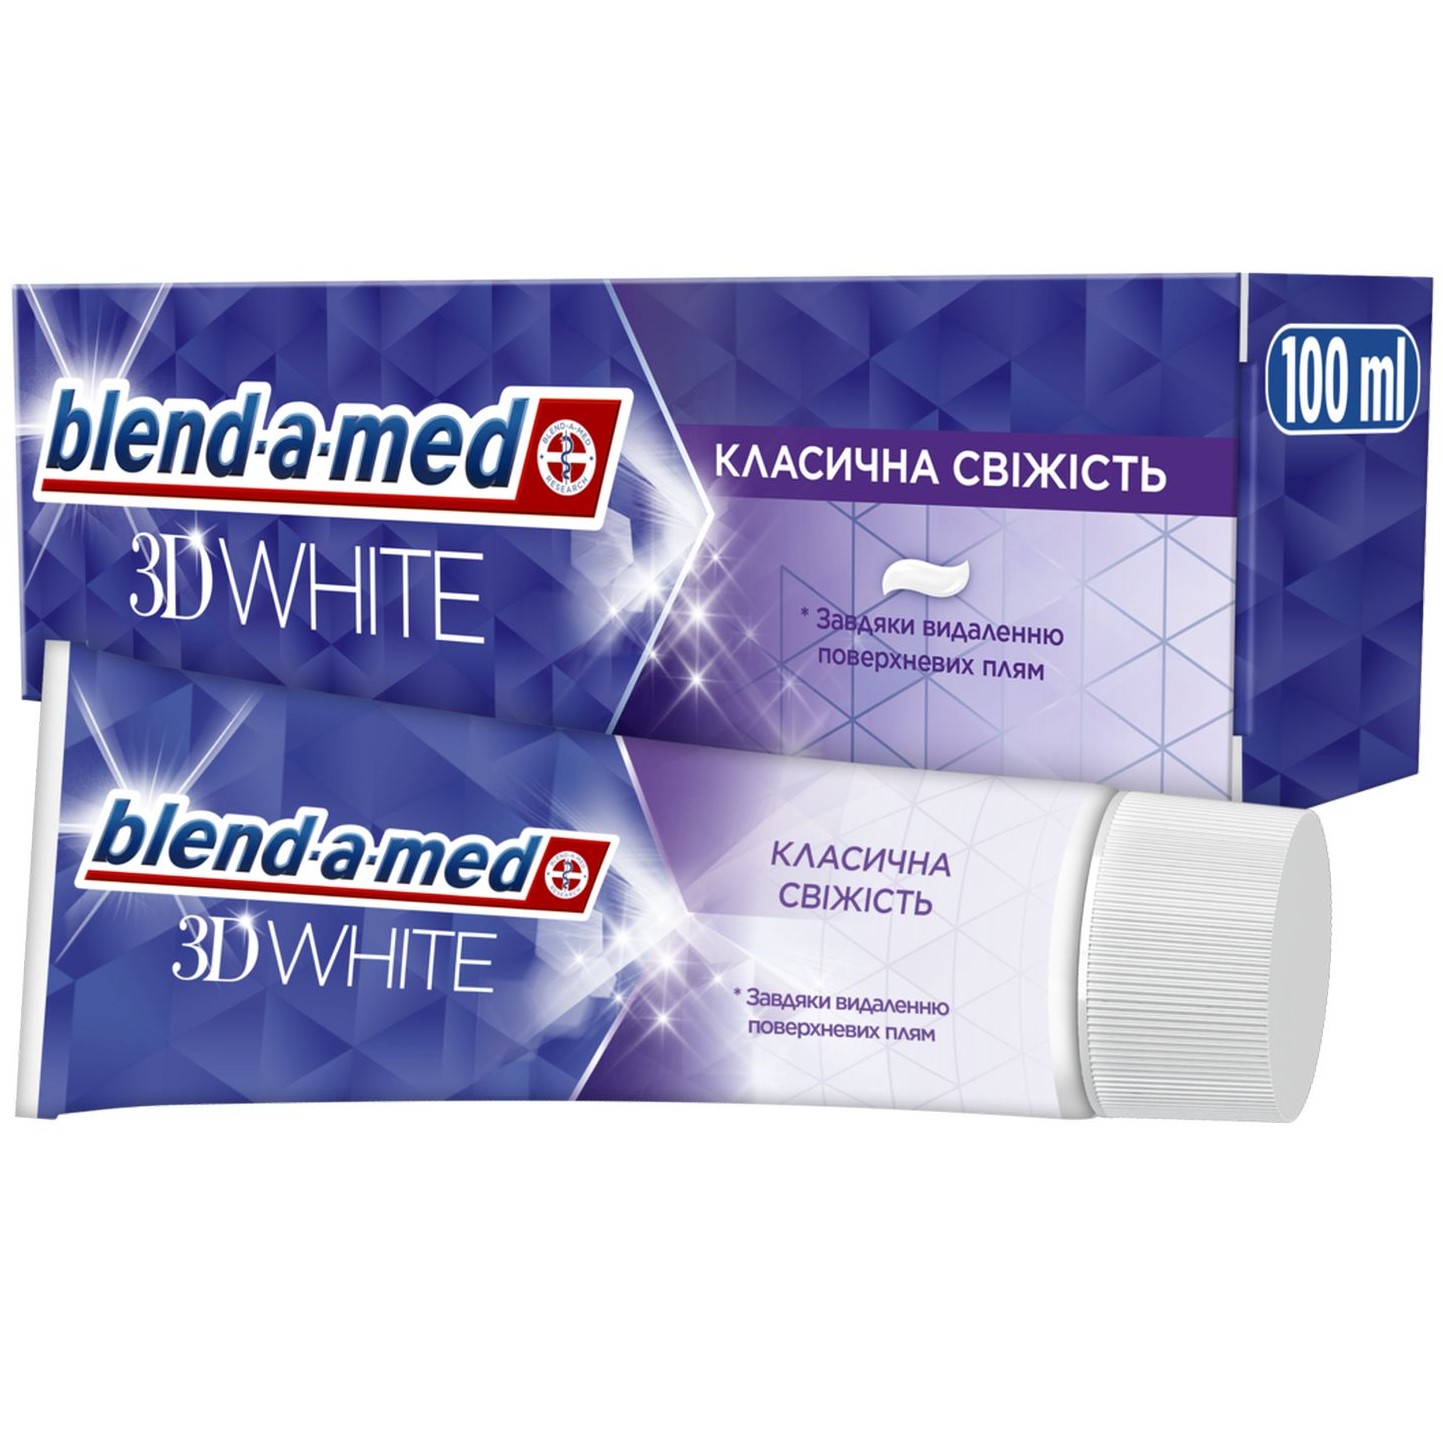 Зубная паста Blend-a-med 3D White Классическая свежесть 100 мл - фото 1